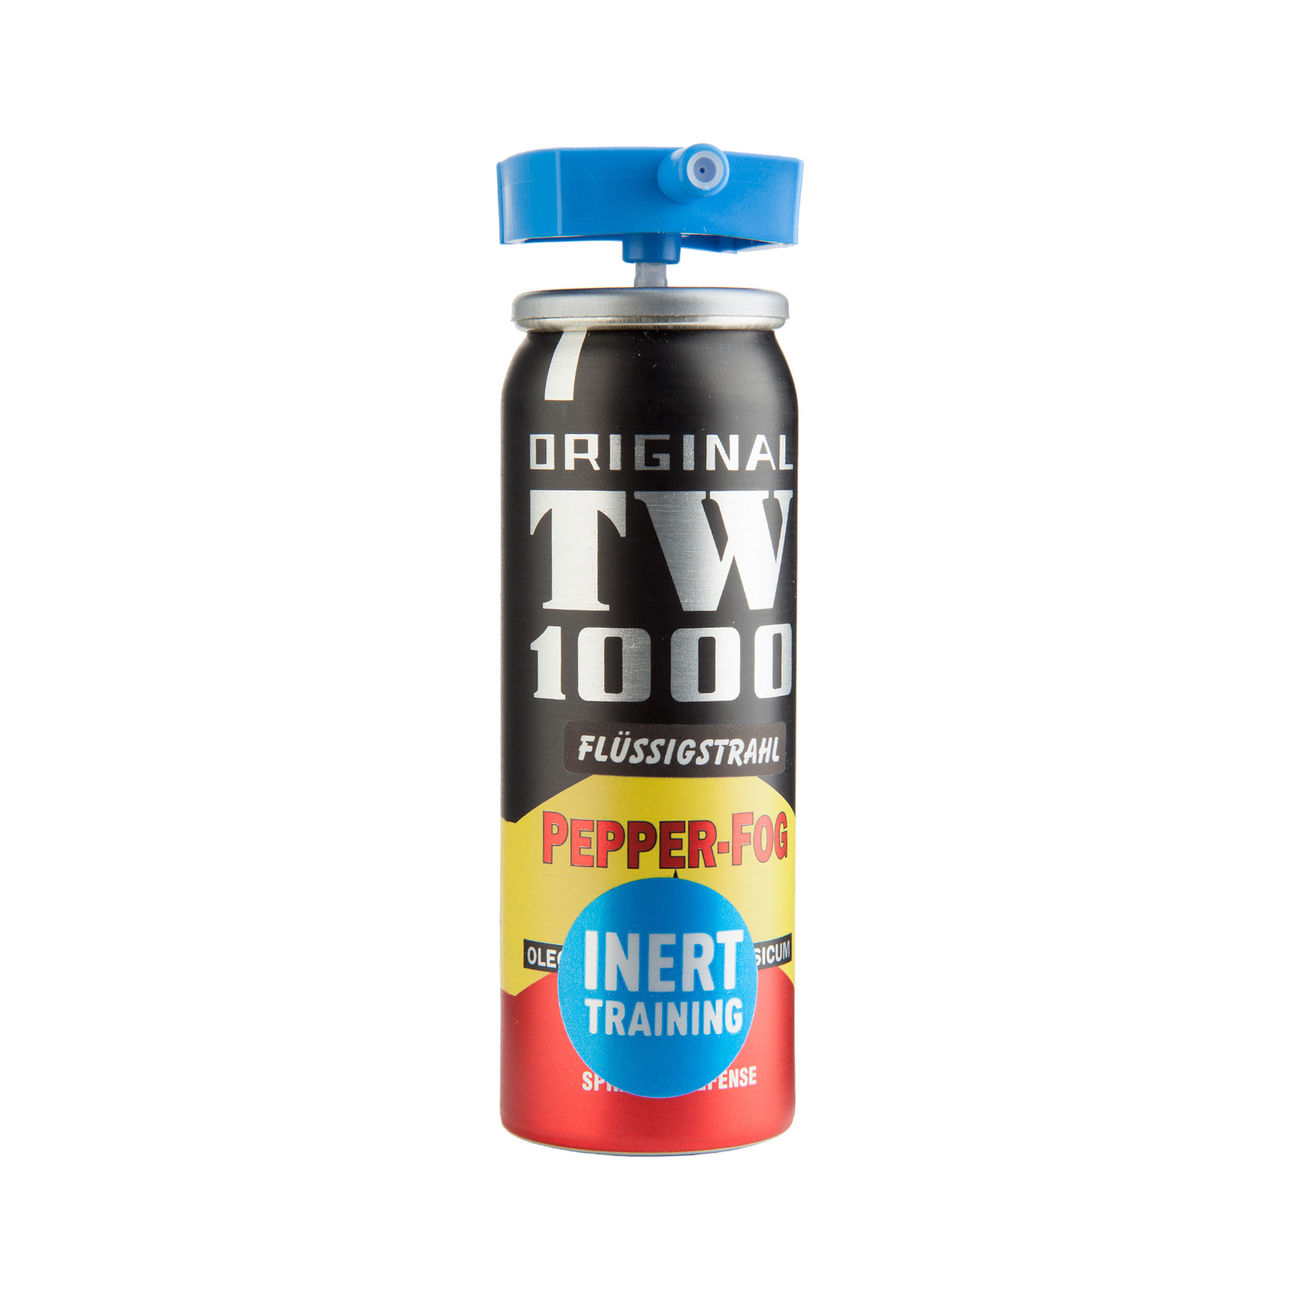 TW1000 Trainingspatrone INERT für Pepper-Jet Super-Garant Professional 63 ml